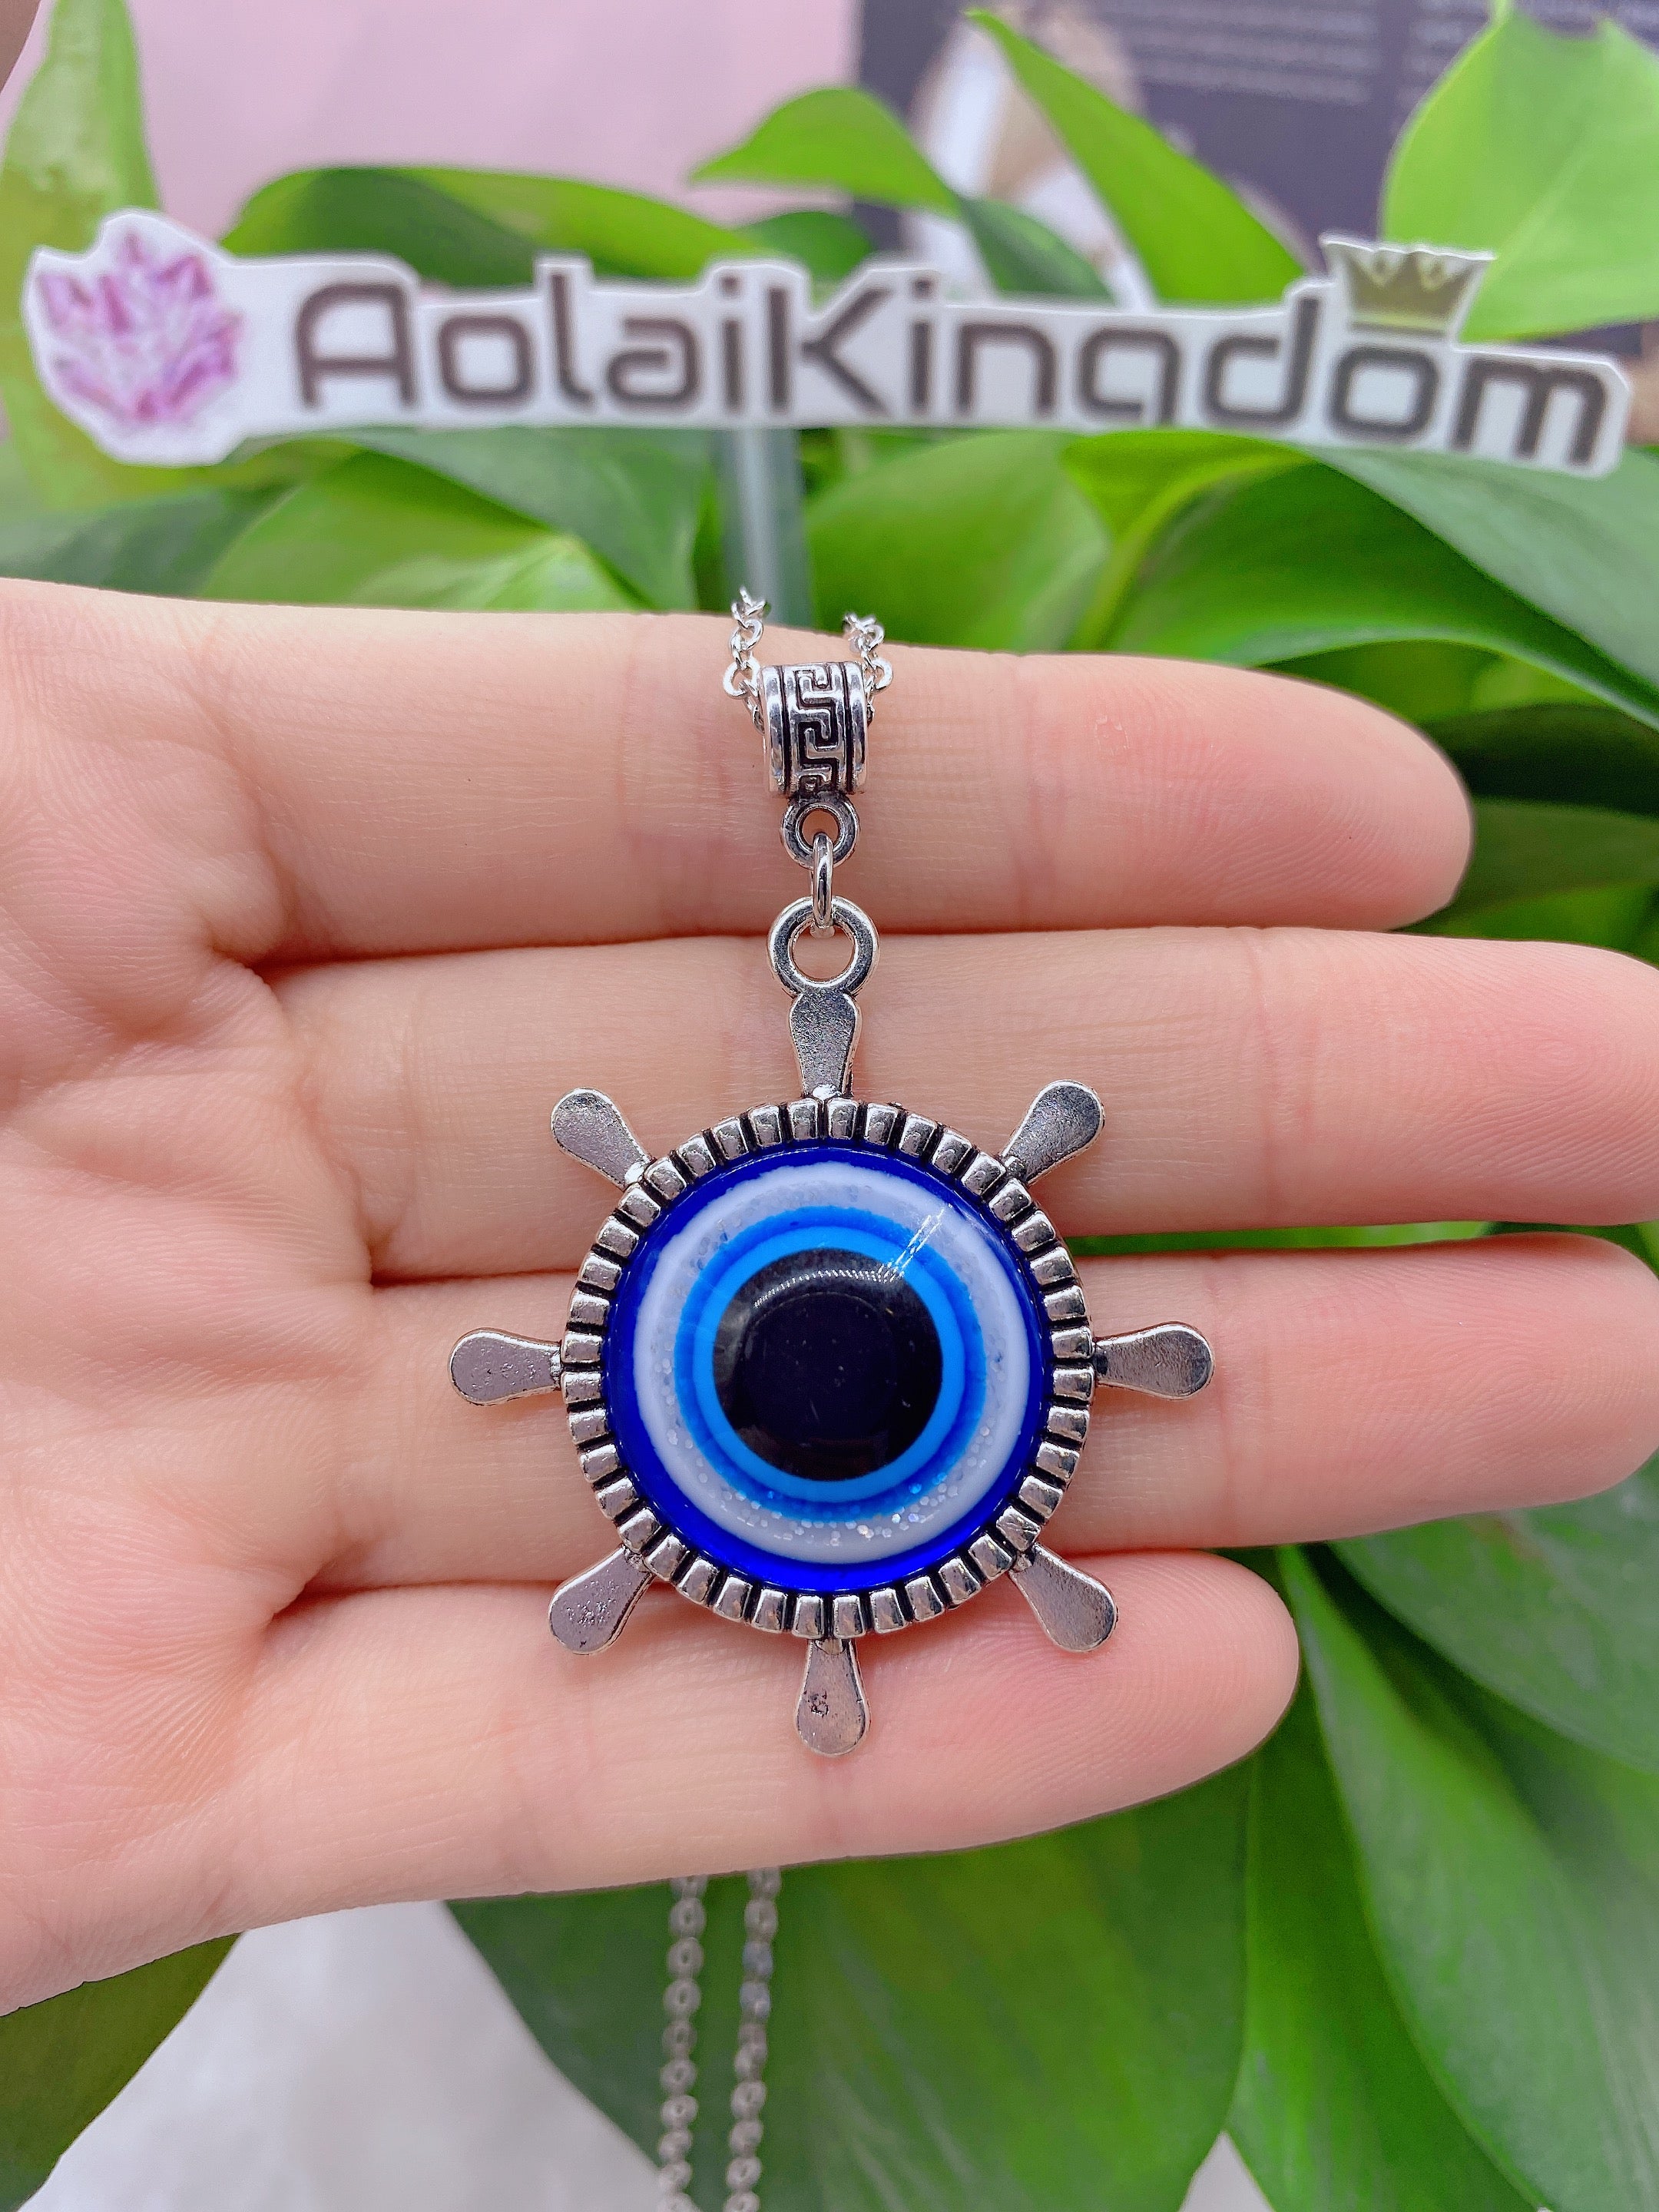 Evil's eye pendant/necklace